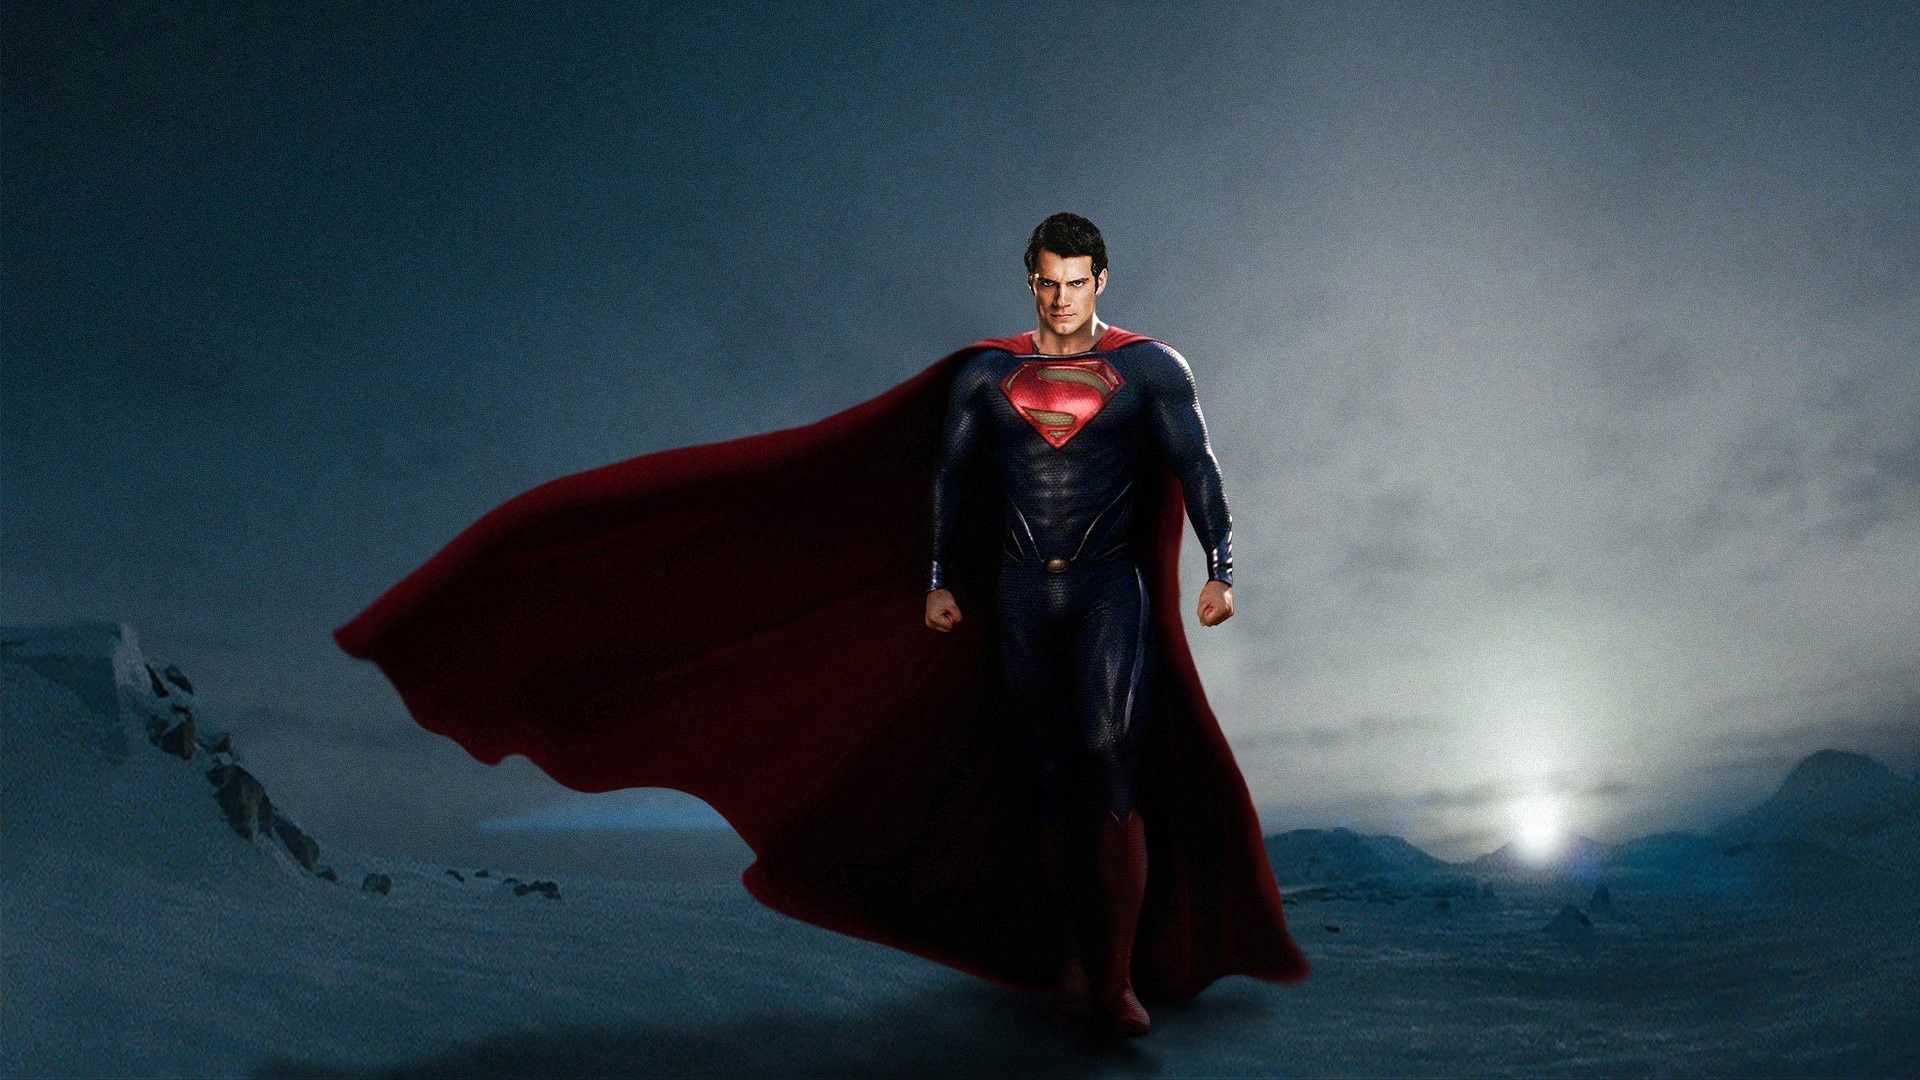 Superman in Man of Steel Wallpapers | HD Wallpapers